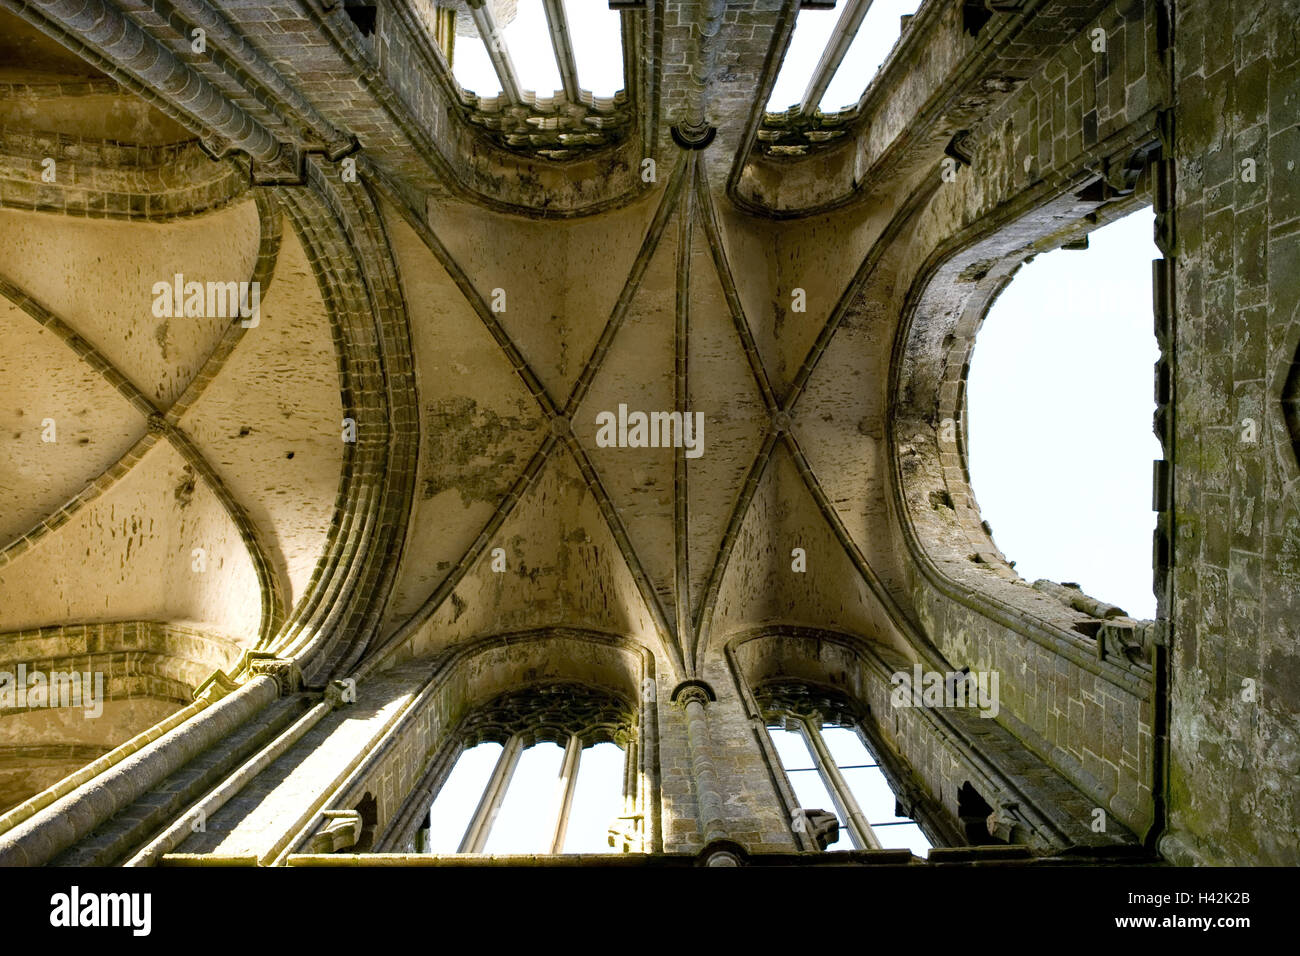 France, Brittany, Finistere, Saint-Renan, point Saint Mathieu, Abbaye de Saint Mathieu, nave, ruin, vault, perspective, Stock Photo